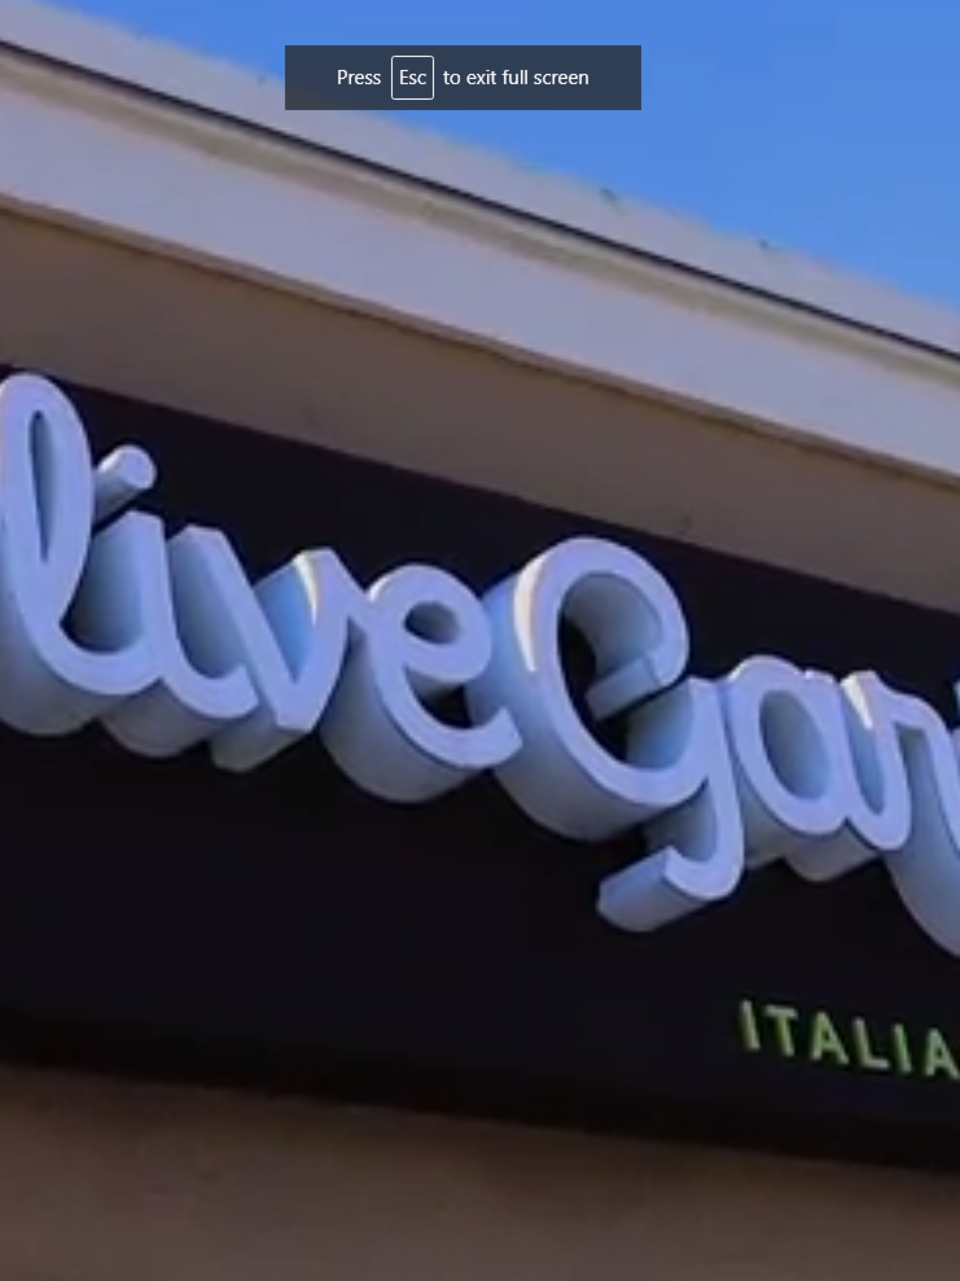 Worker Olive Garden Customer Demanded And Got White Server Wics